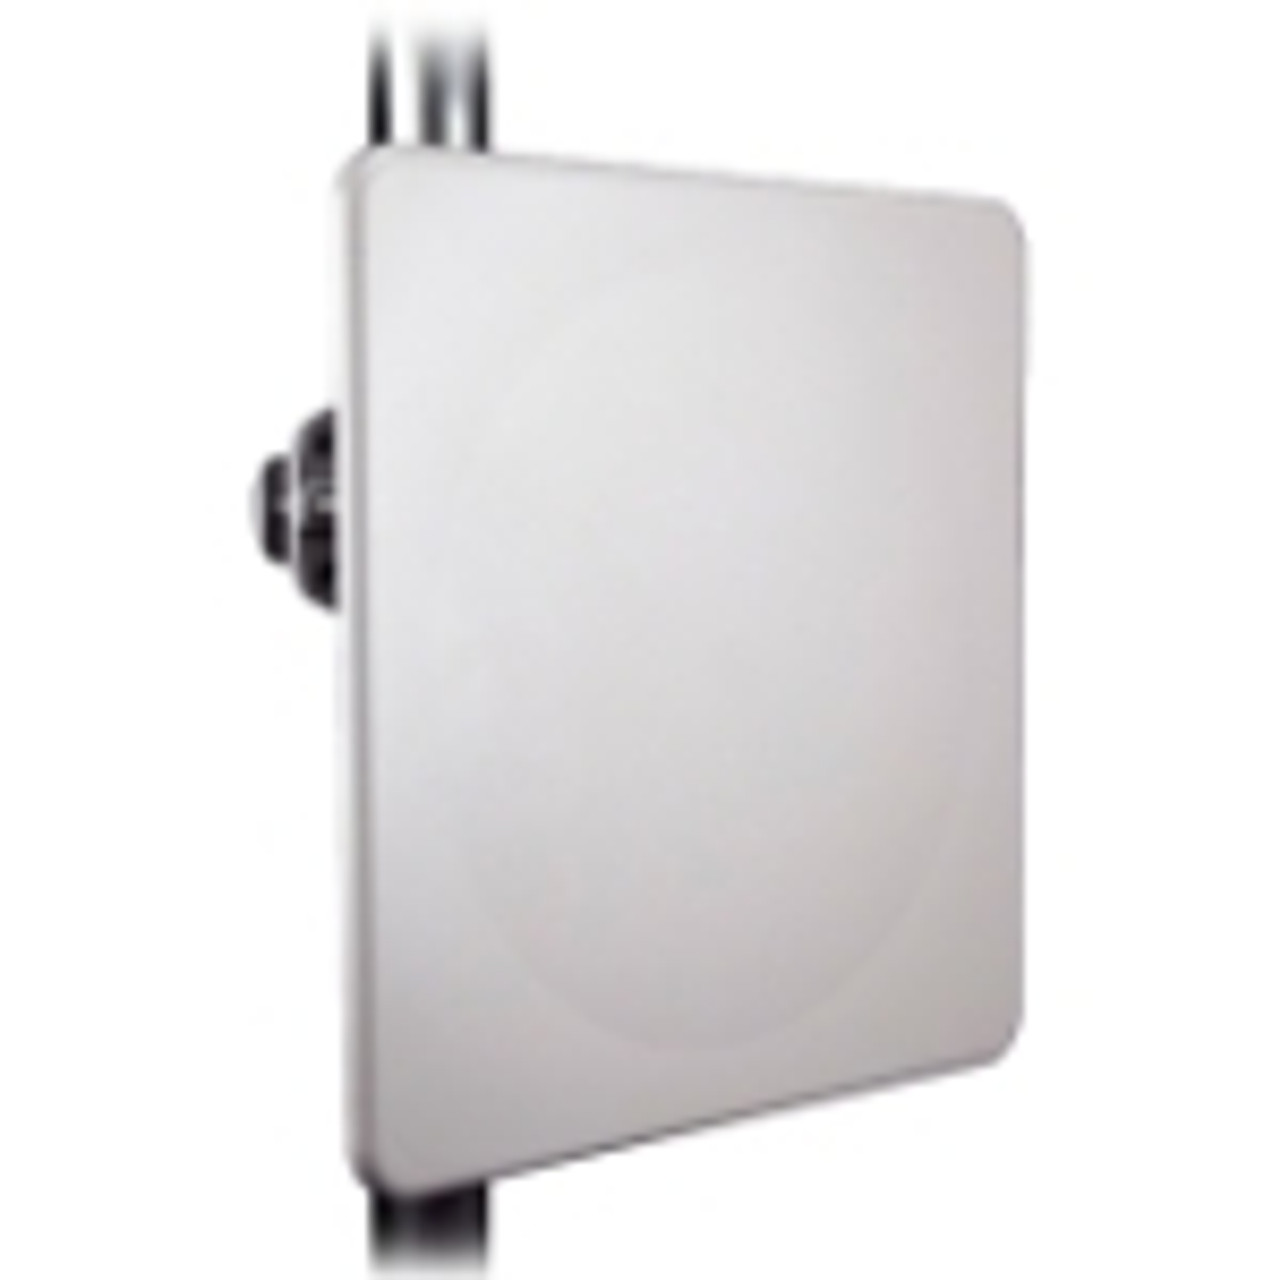 AP-ANT-93 Aruba MIMO Antenna Range SHF5 GHz 14 dBi Wireless Data Network, OutdoorPole/Wall Directional